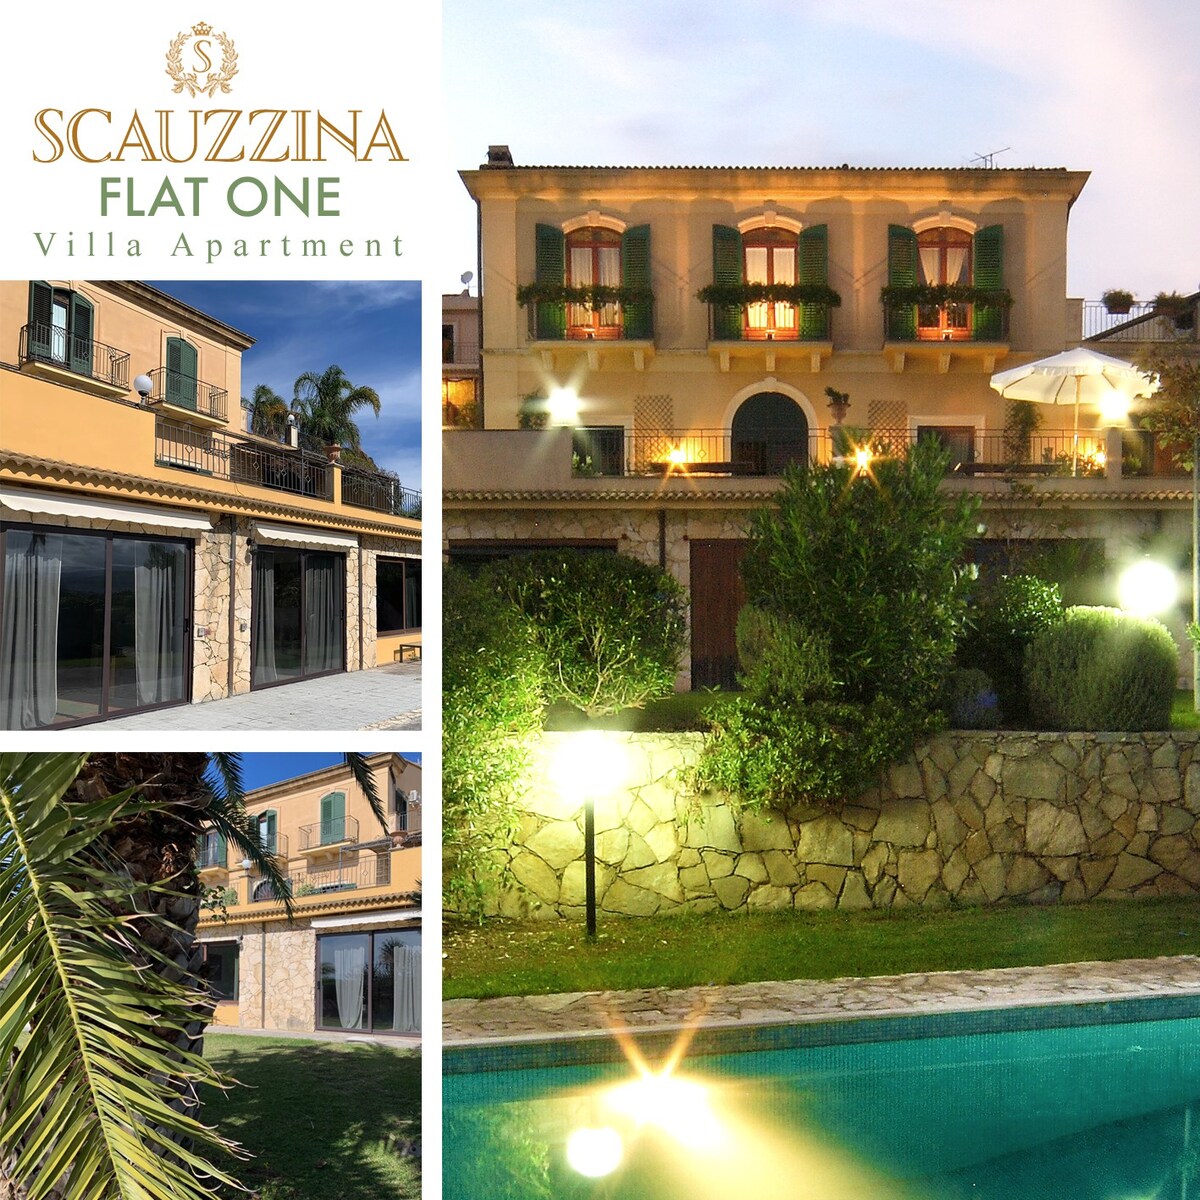 Scauzzina “Flat One” Villa Apartment